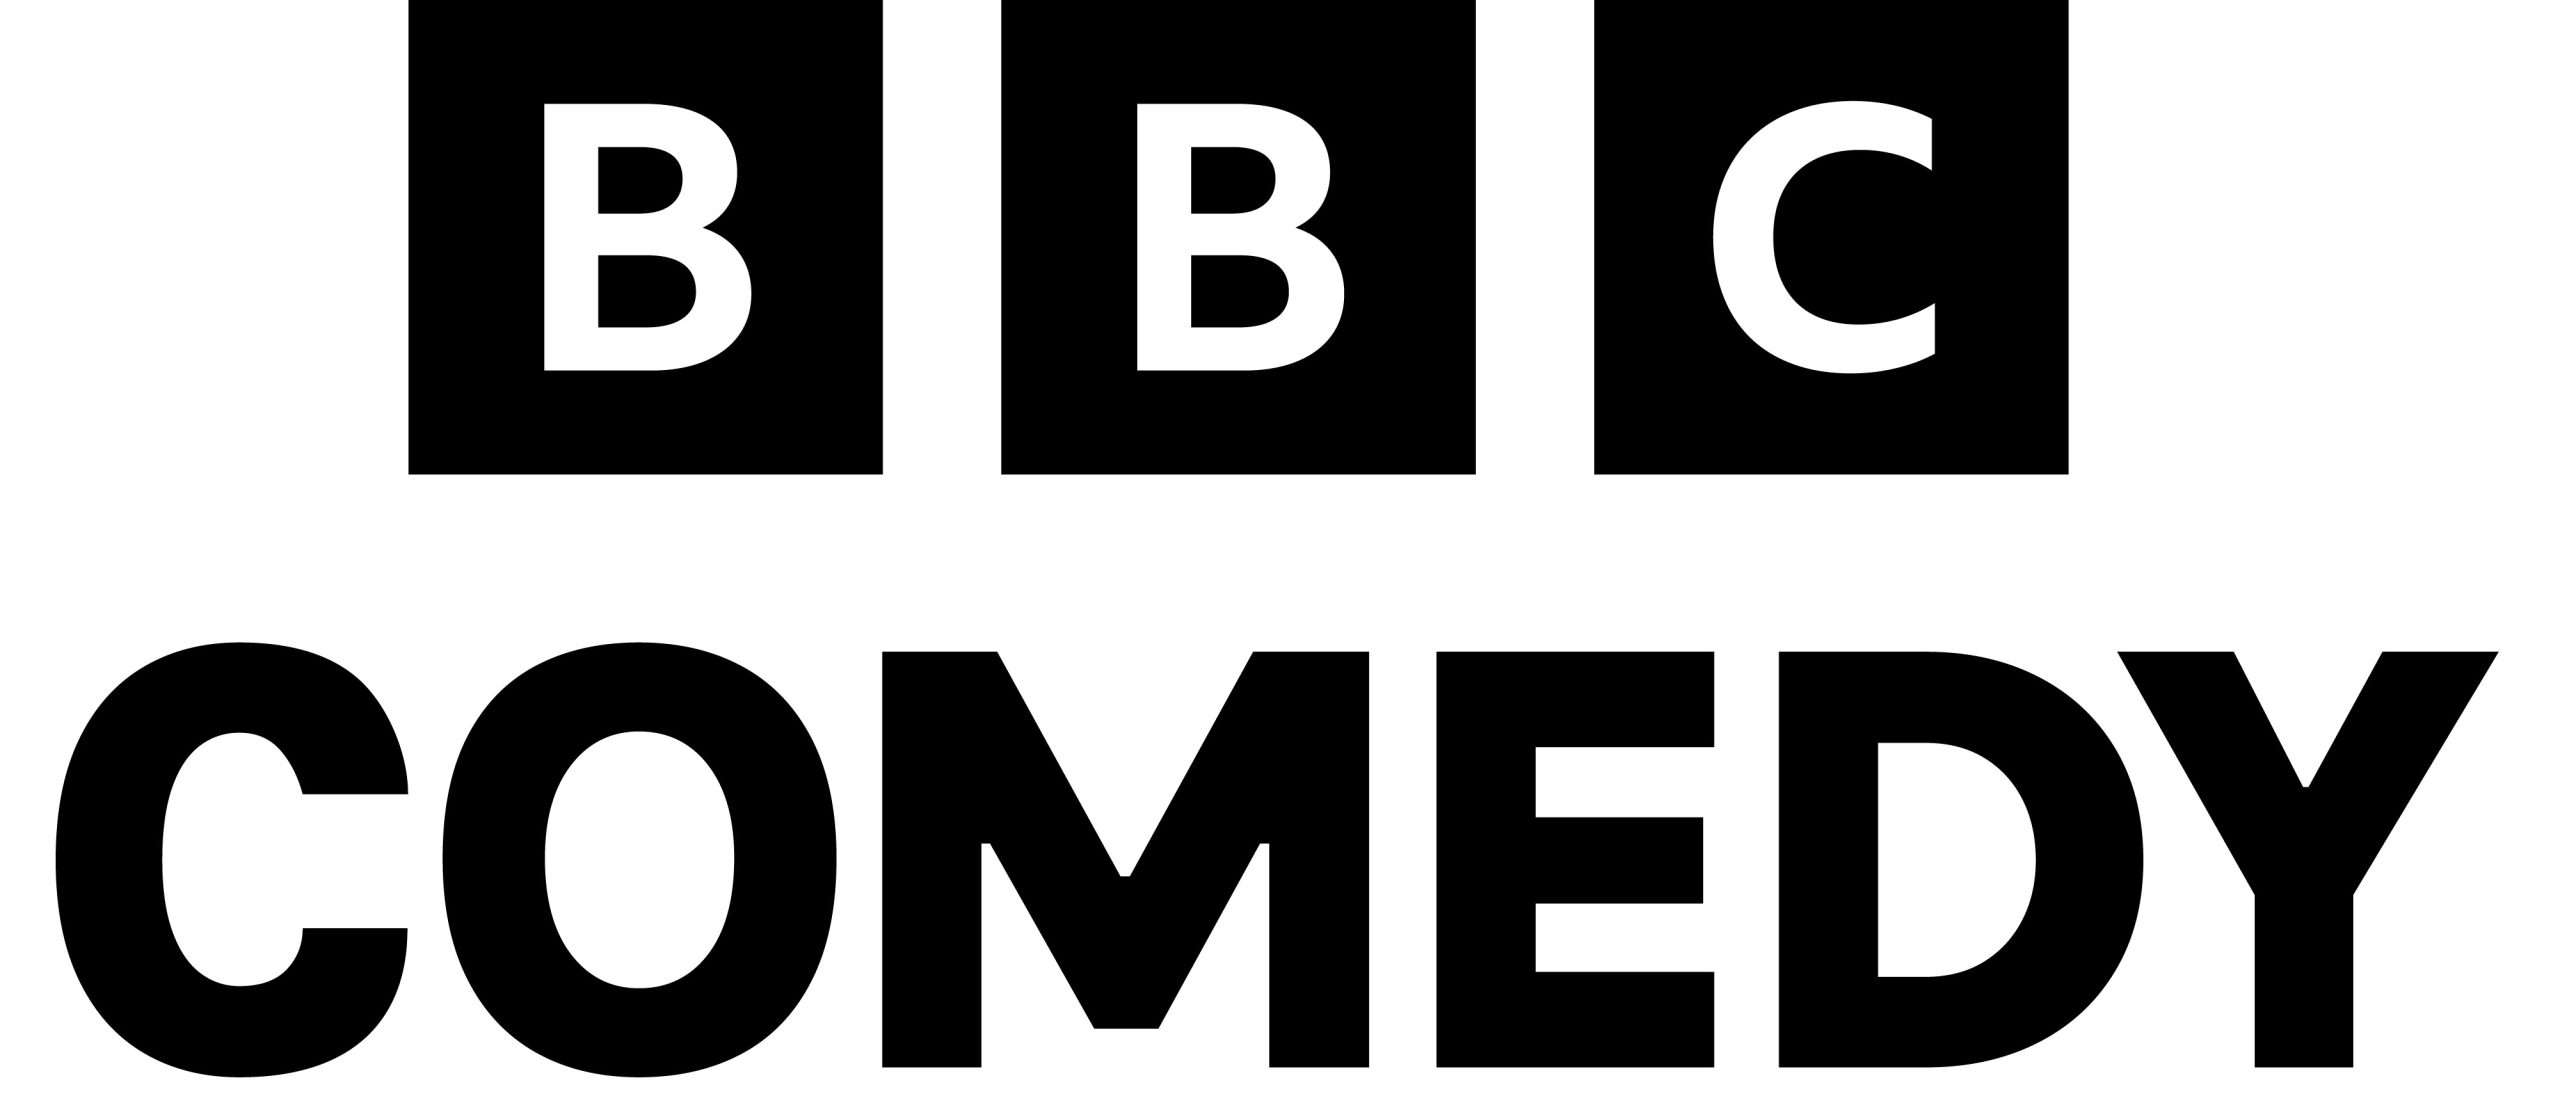 https://northeastscreen.org/wp-content/uploads/2022/09/BBC-Comedy-logo-1-scaled.jpg